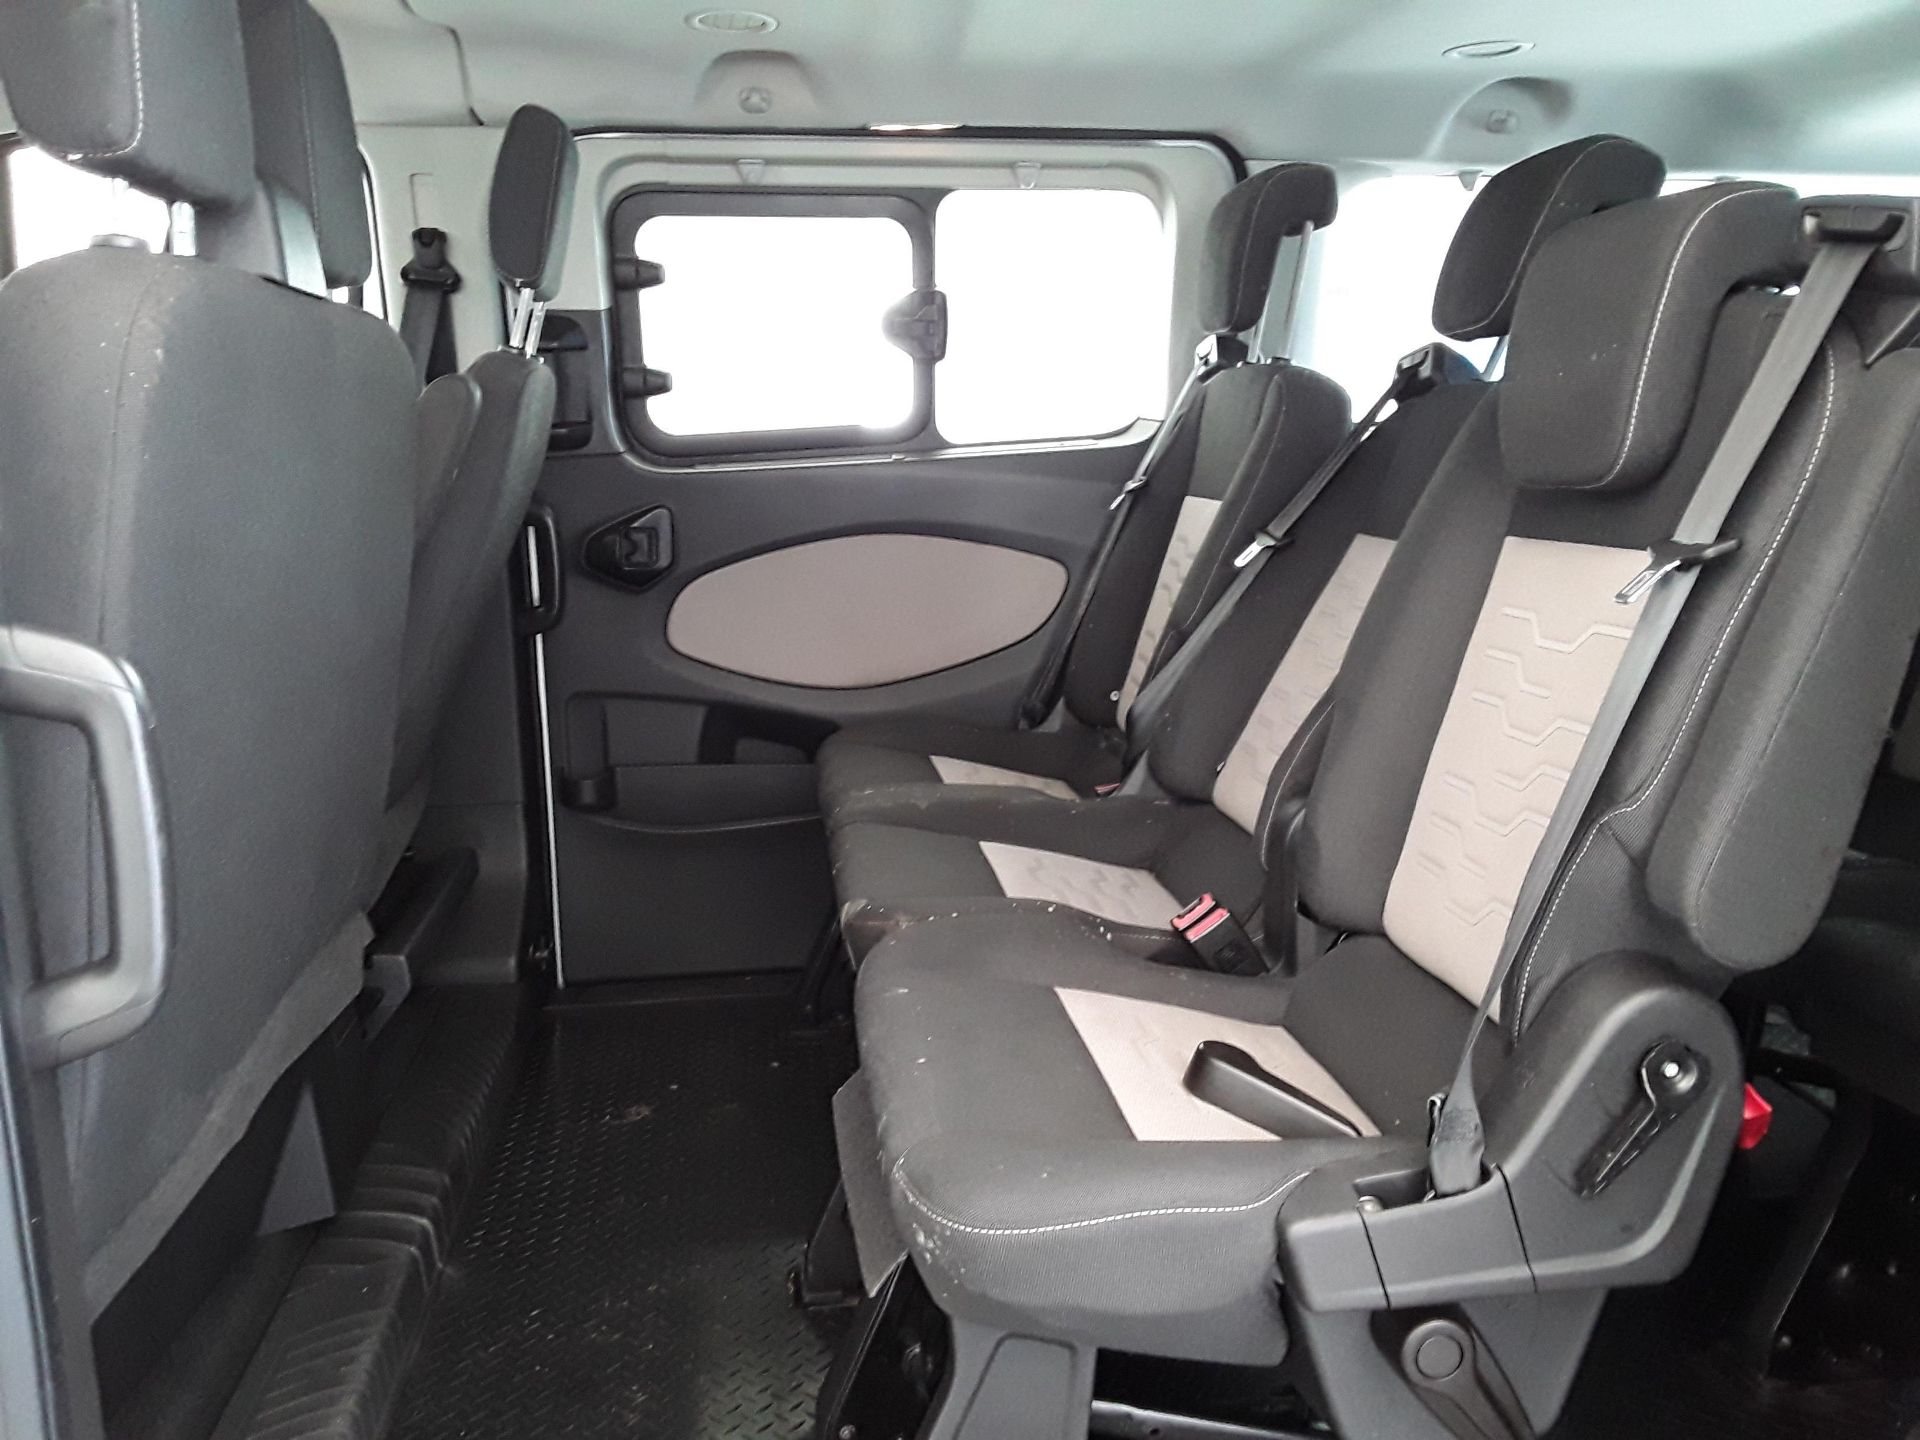 (RESERVE MET) Ford Transit Custom 300 125 2.2 Tdci MiniBus Ltd 2014 -64Reg- 8 Seats-Air Con-*NO VAT* - Image 7 of 7